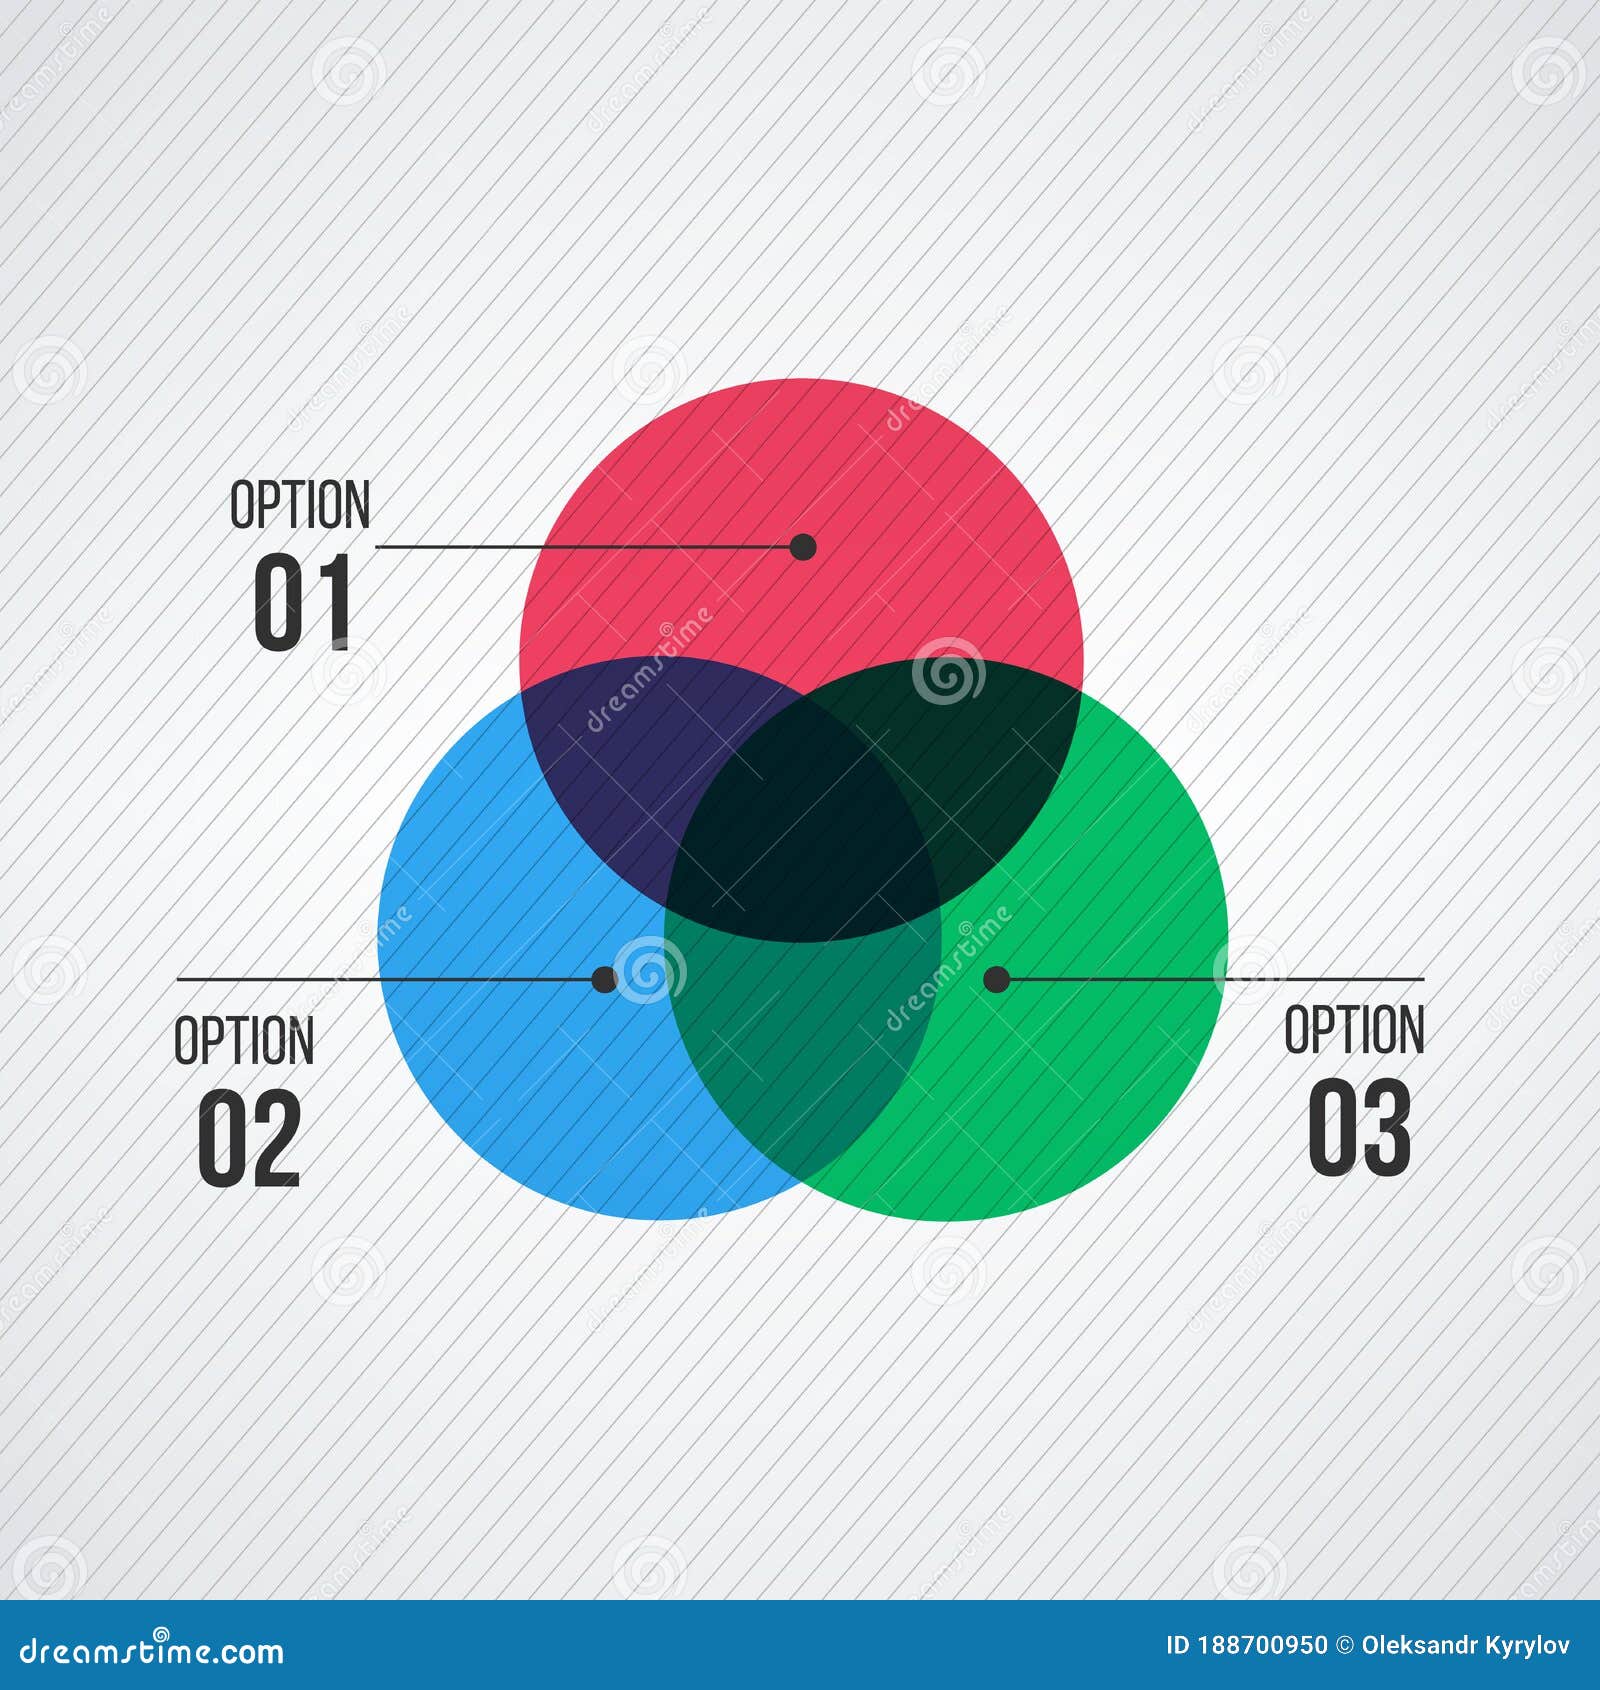 Infographic Venn Diagram Overlapping Circles Data Visualization | The ...